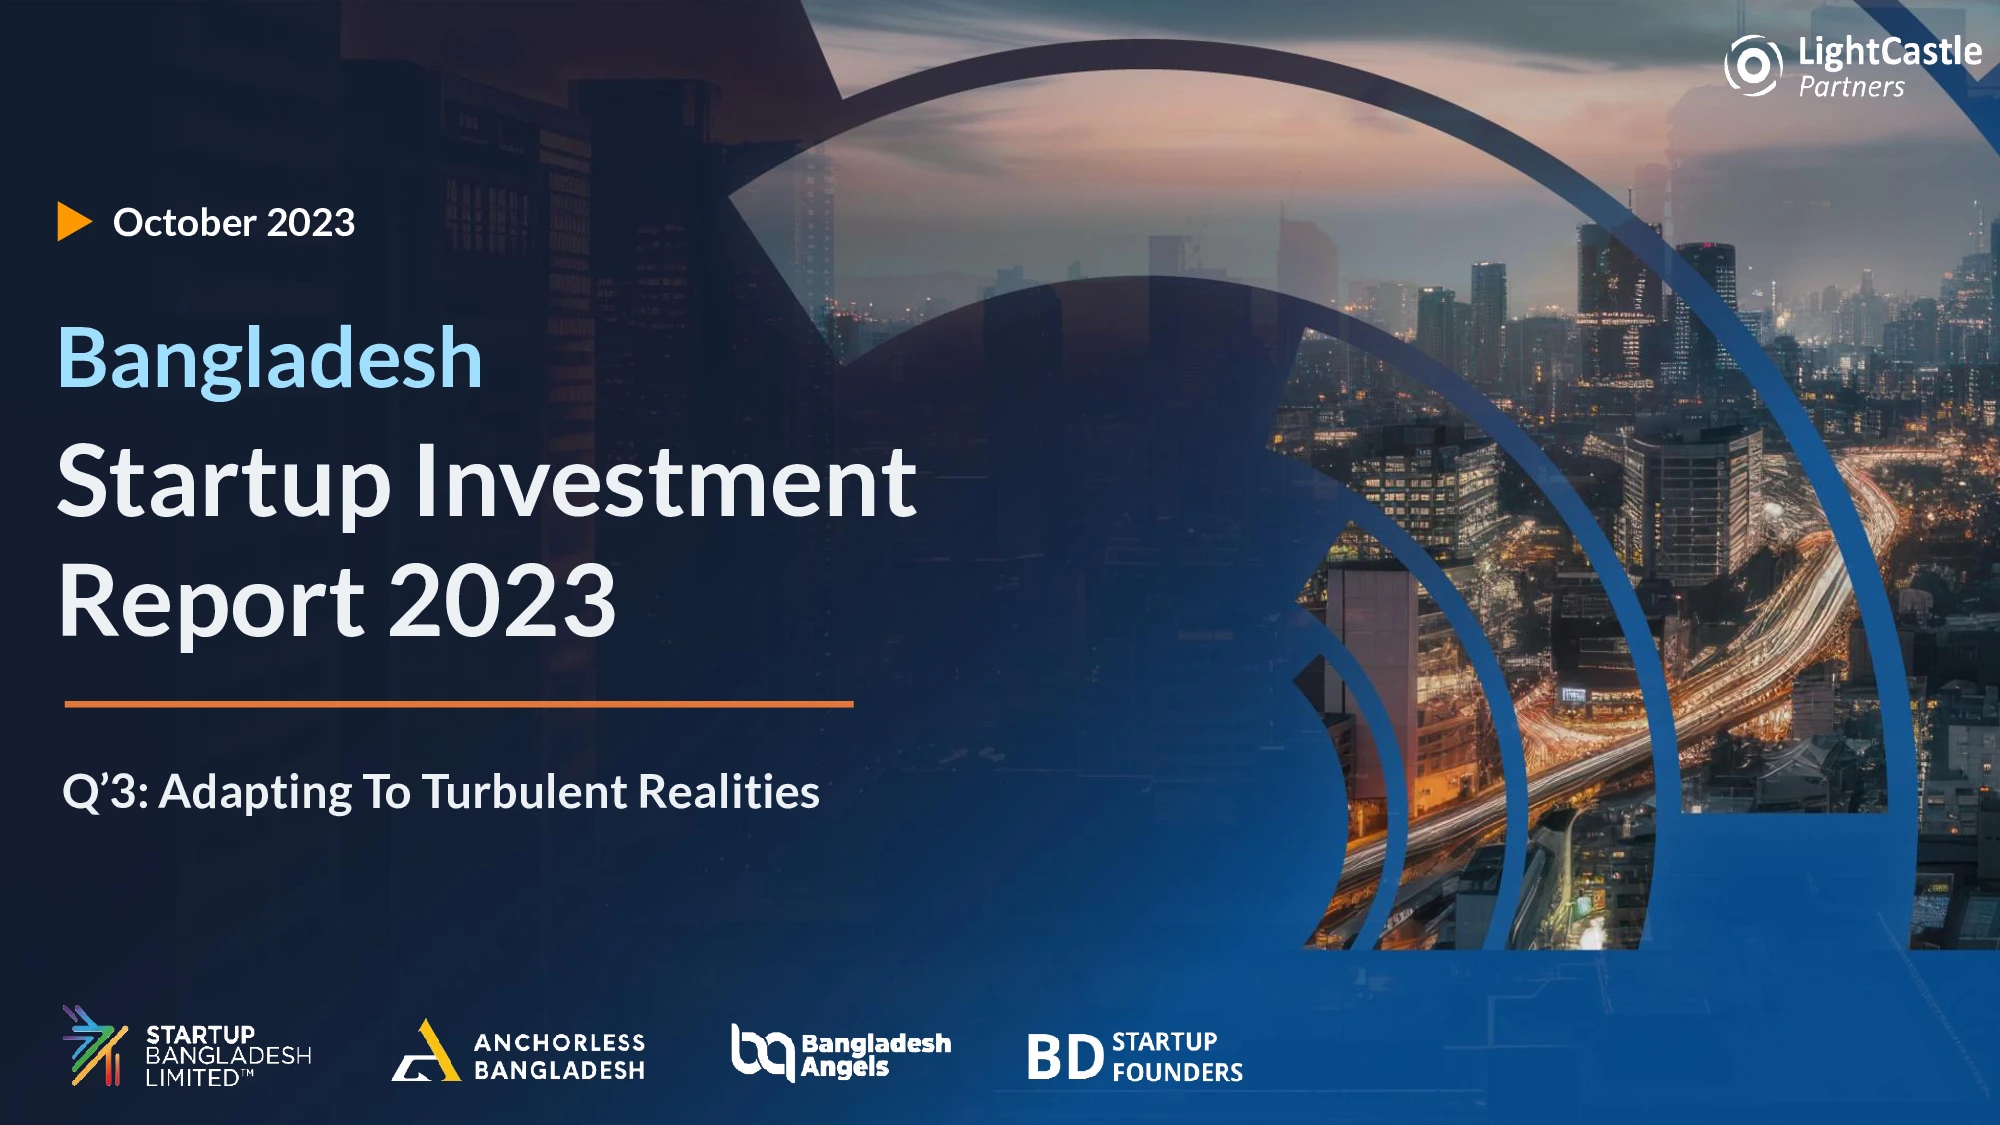 Bangladesh Startup Investment Report Q’3 2023: Adapting To Turbulent Realities